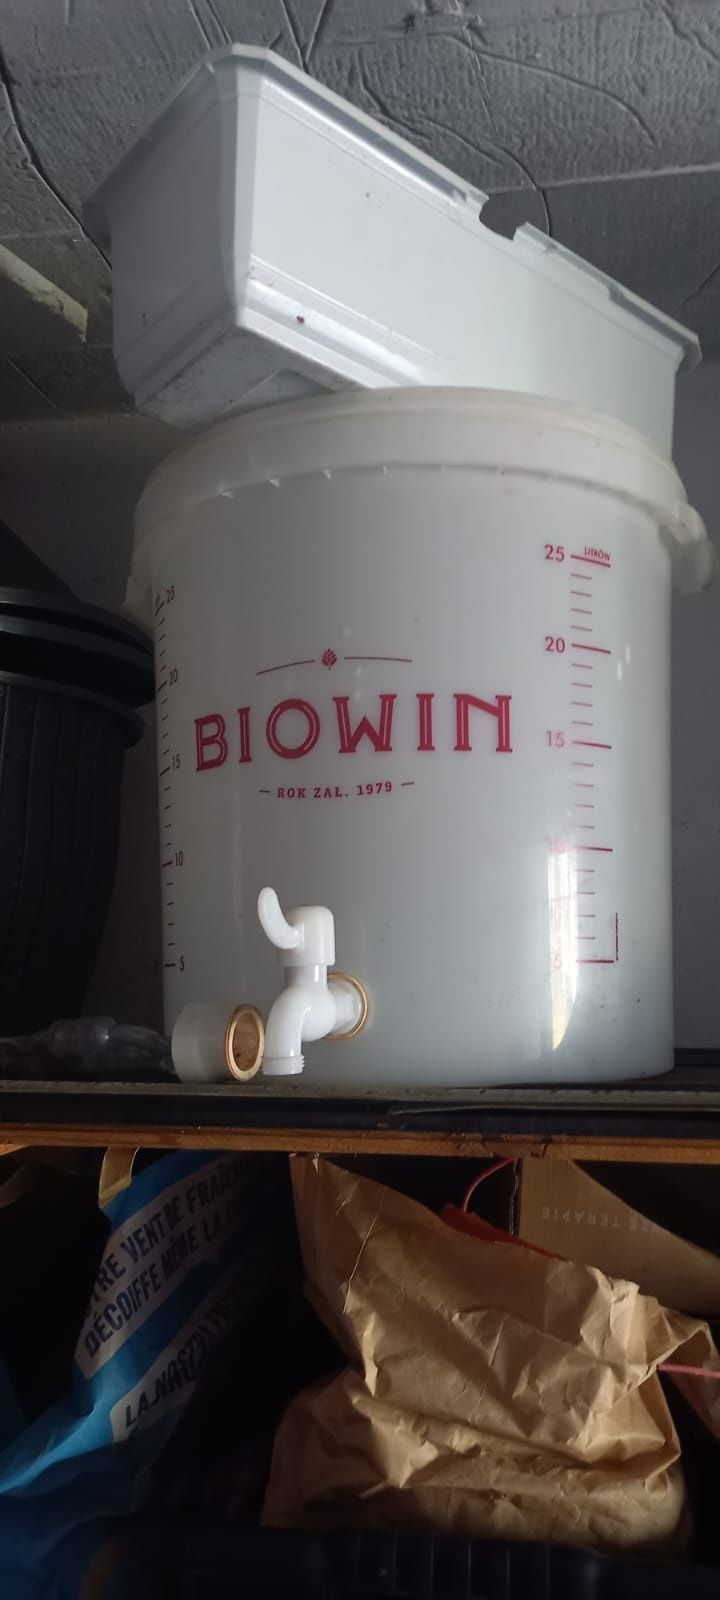 BROWIN Biowin 25l